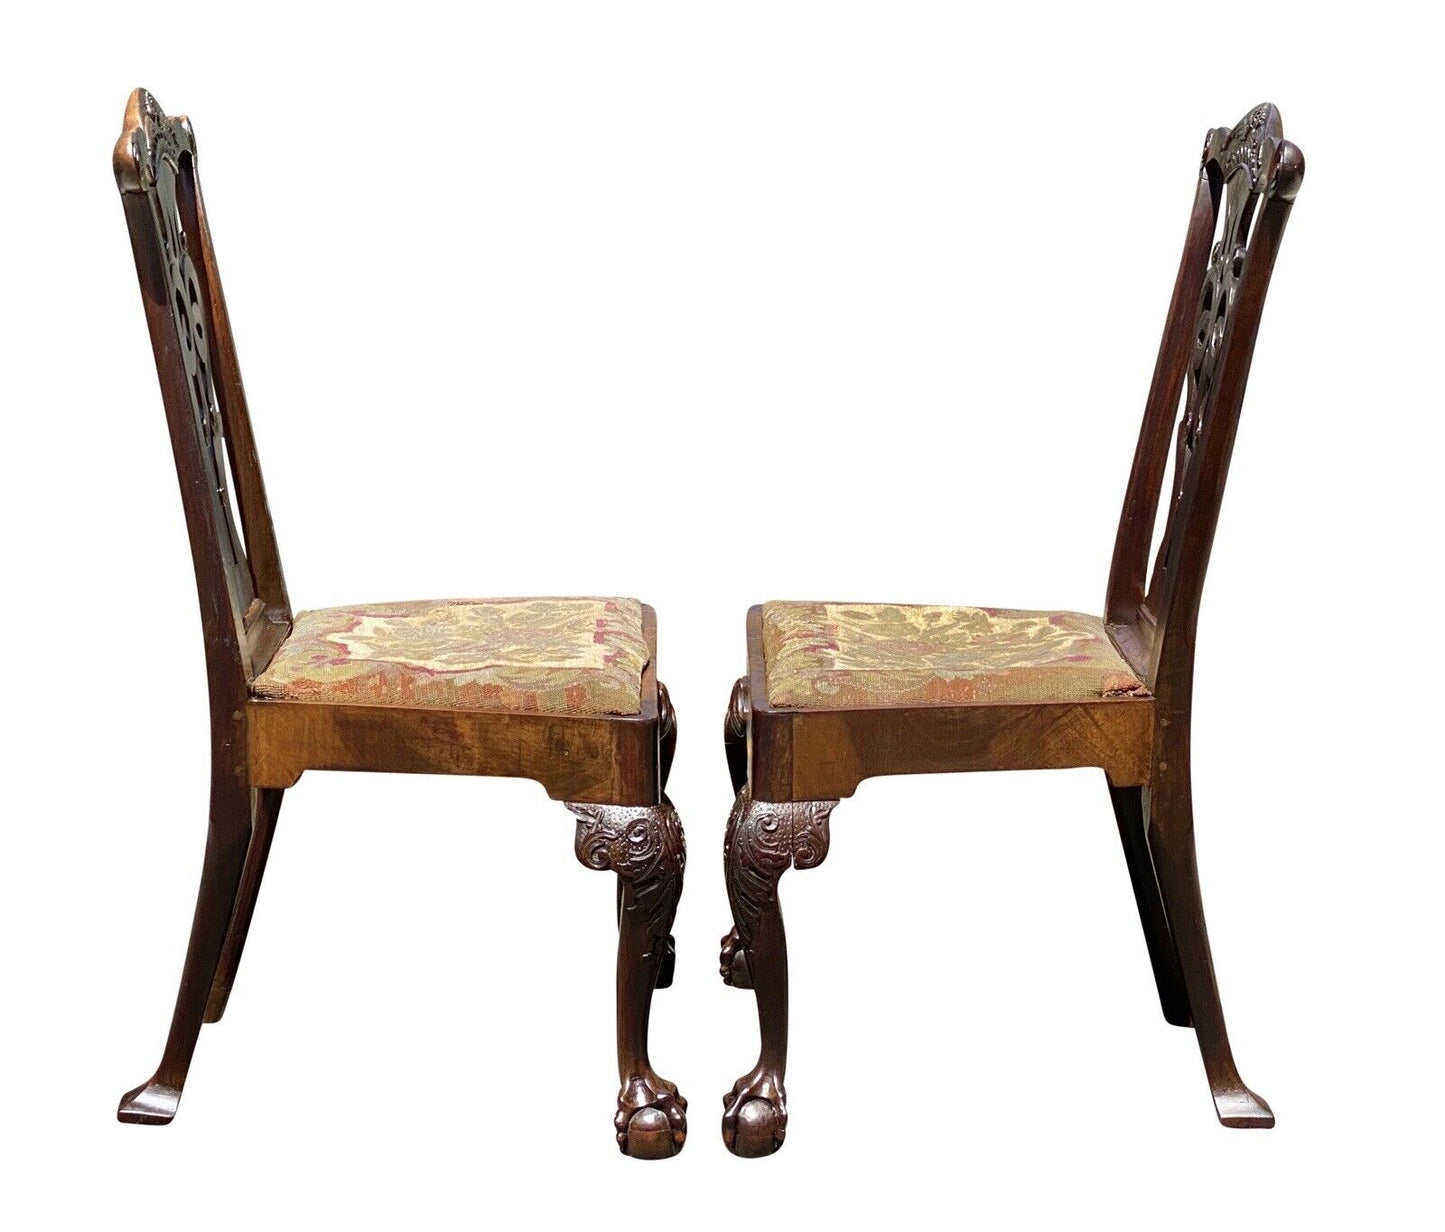 18th C Pair of Antique Irish Chippendale Chairs - Irish Phoenix W/ Ball & Claw